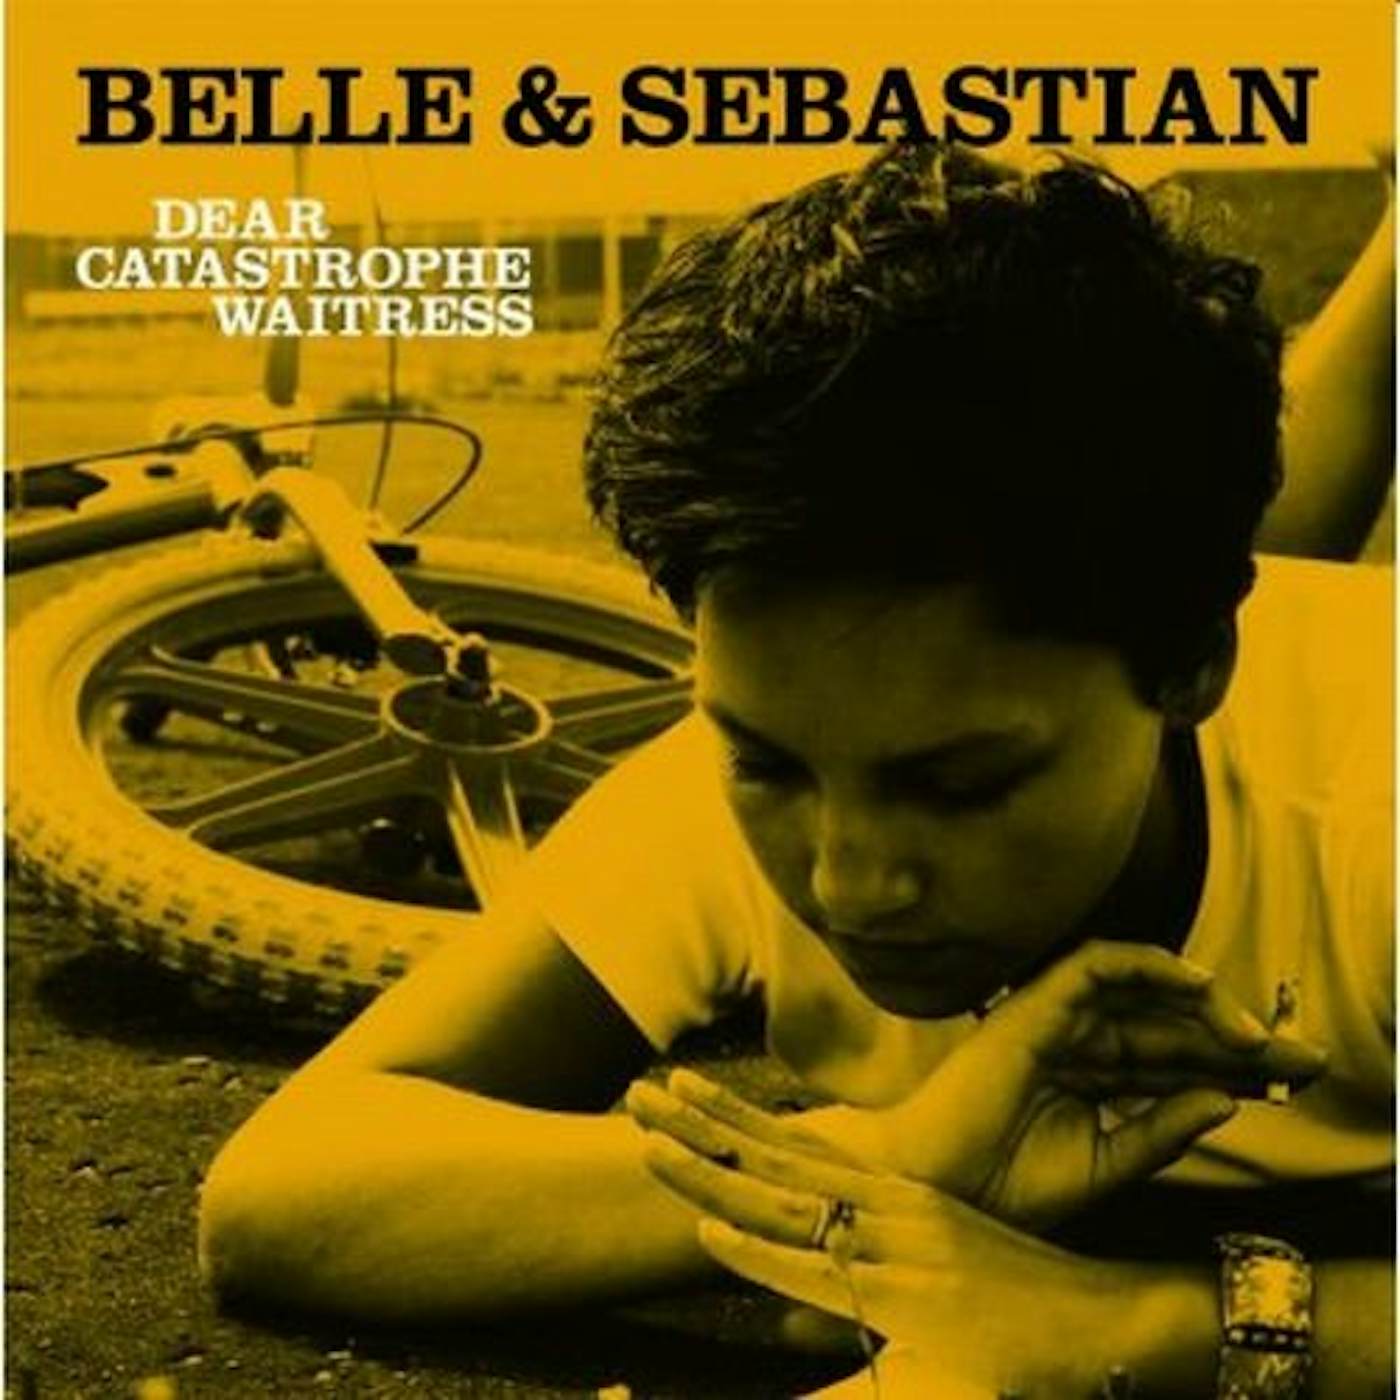 Belle and Sebastian DEAR CATASTROPHE WAITRESS CD